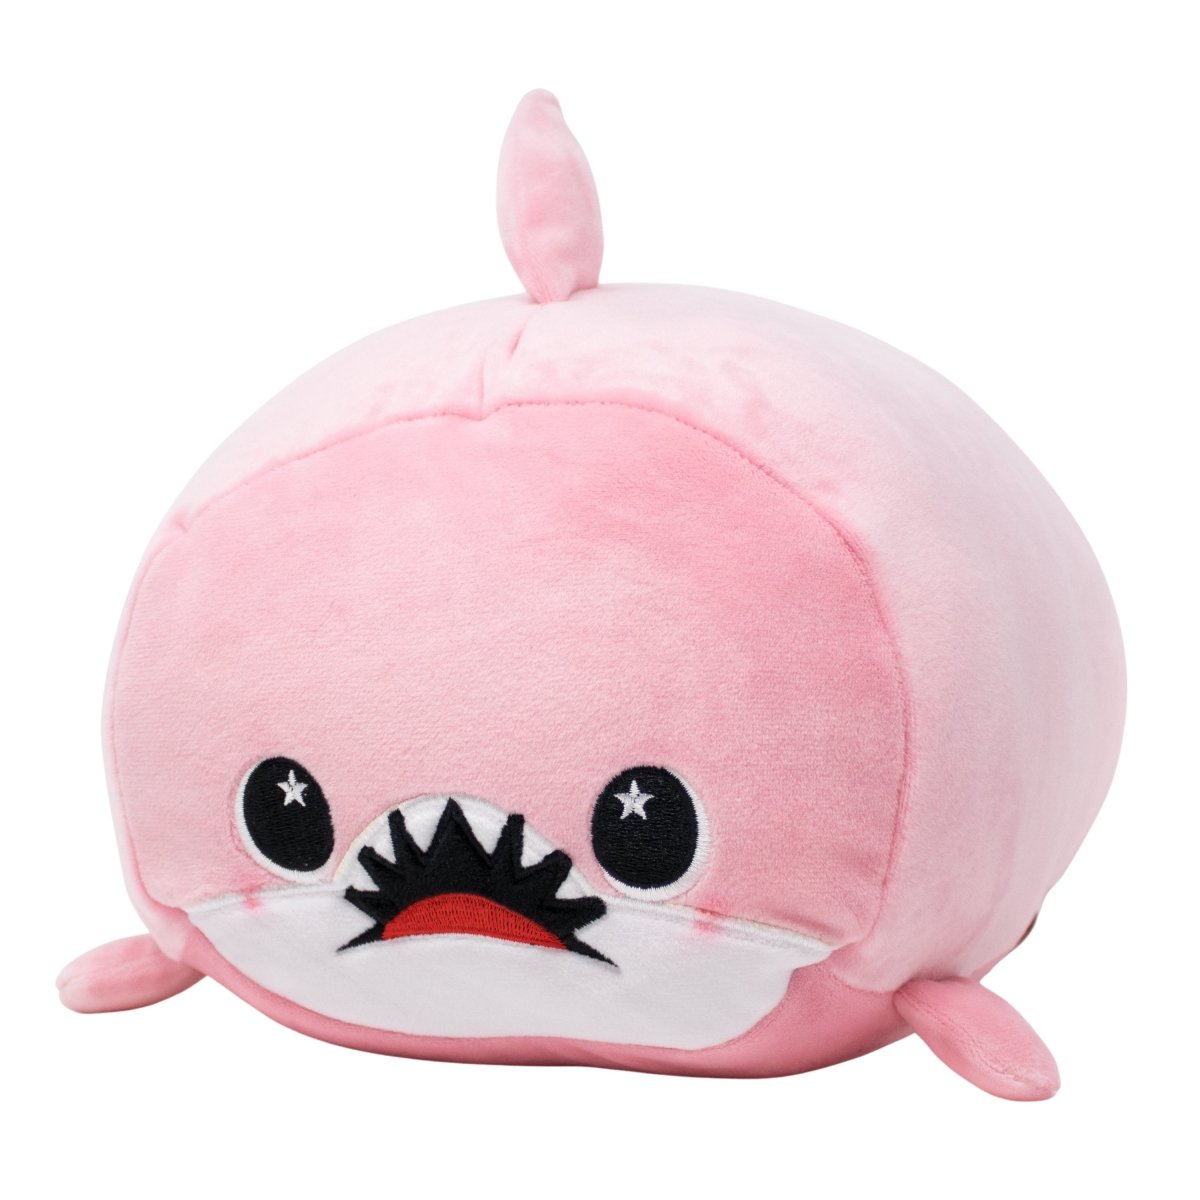 Pink shark stuffed animal